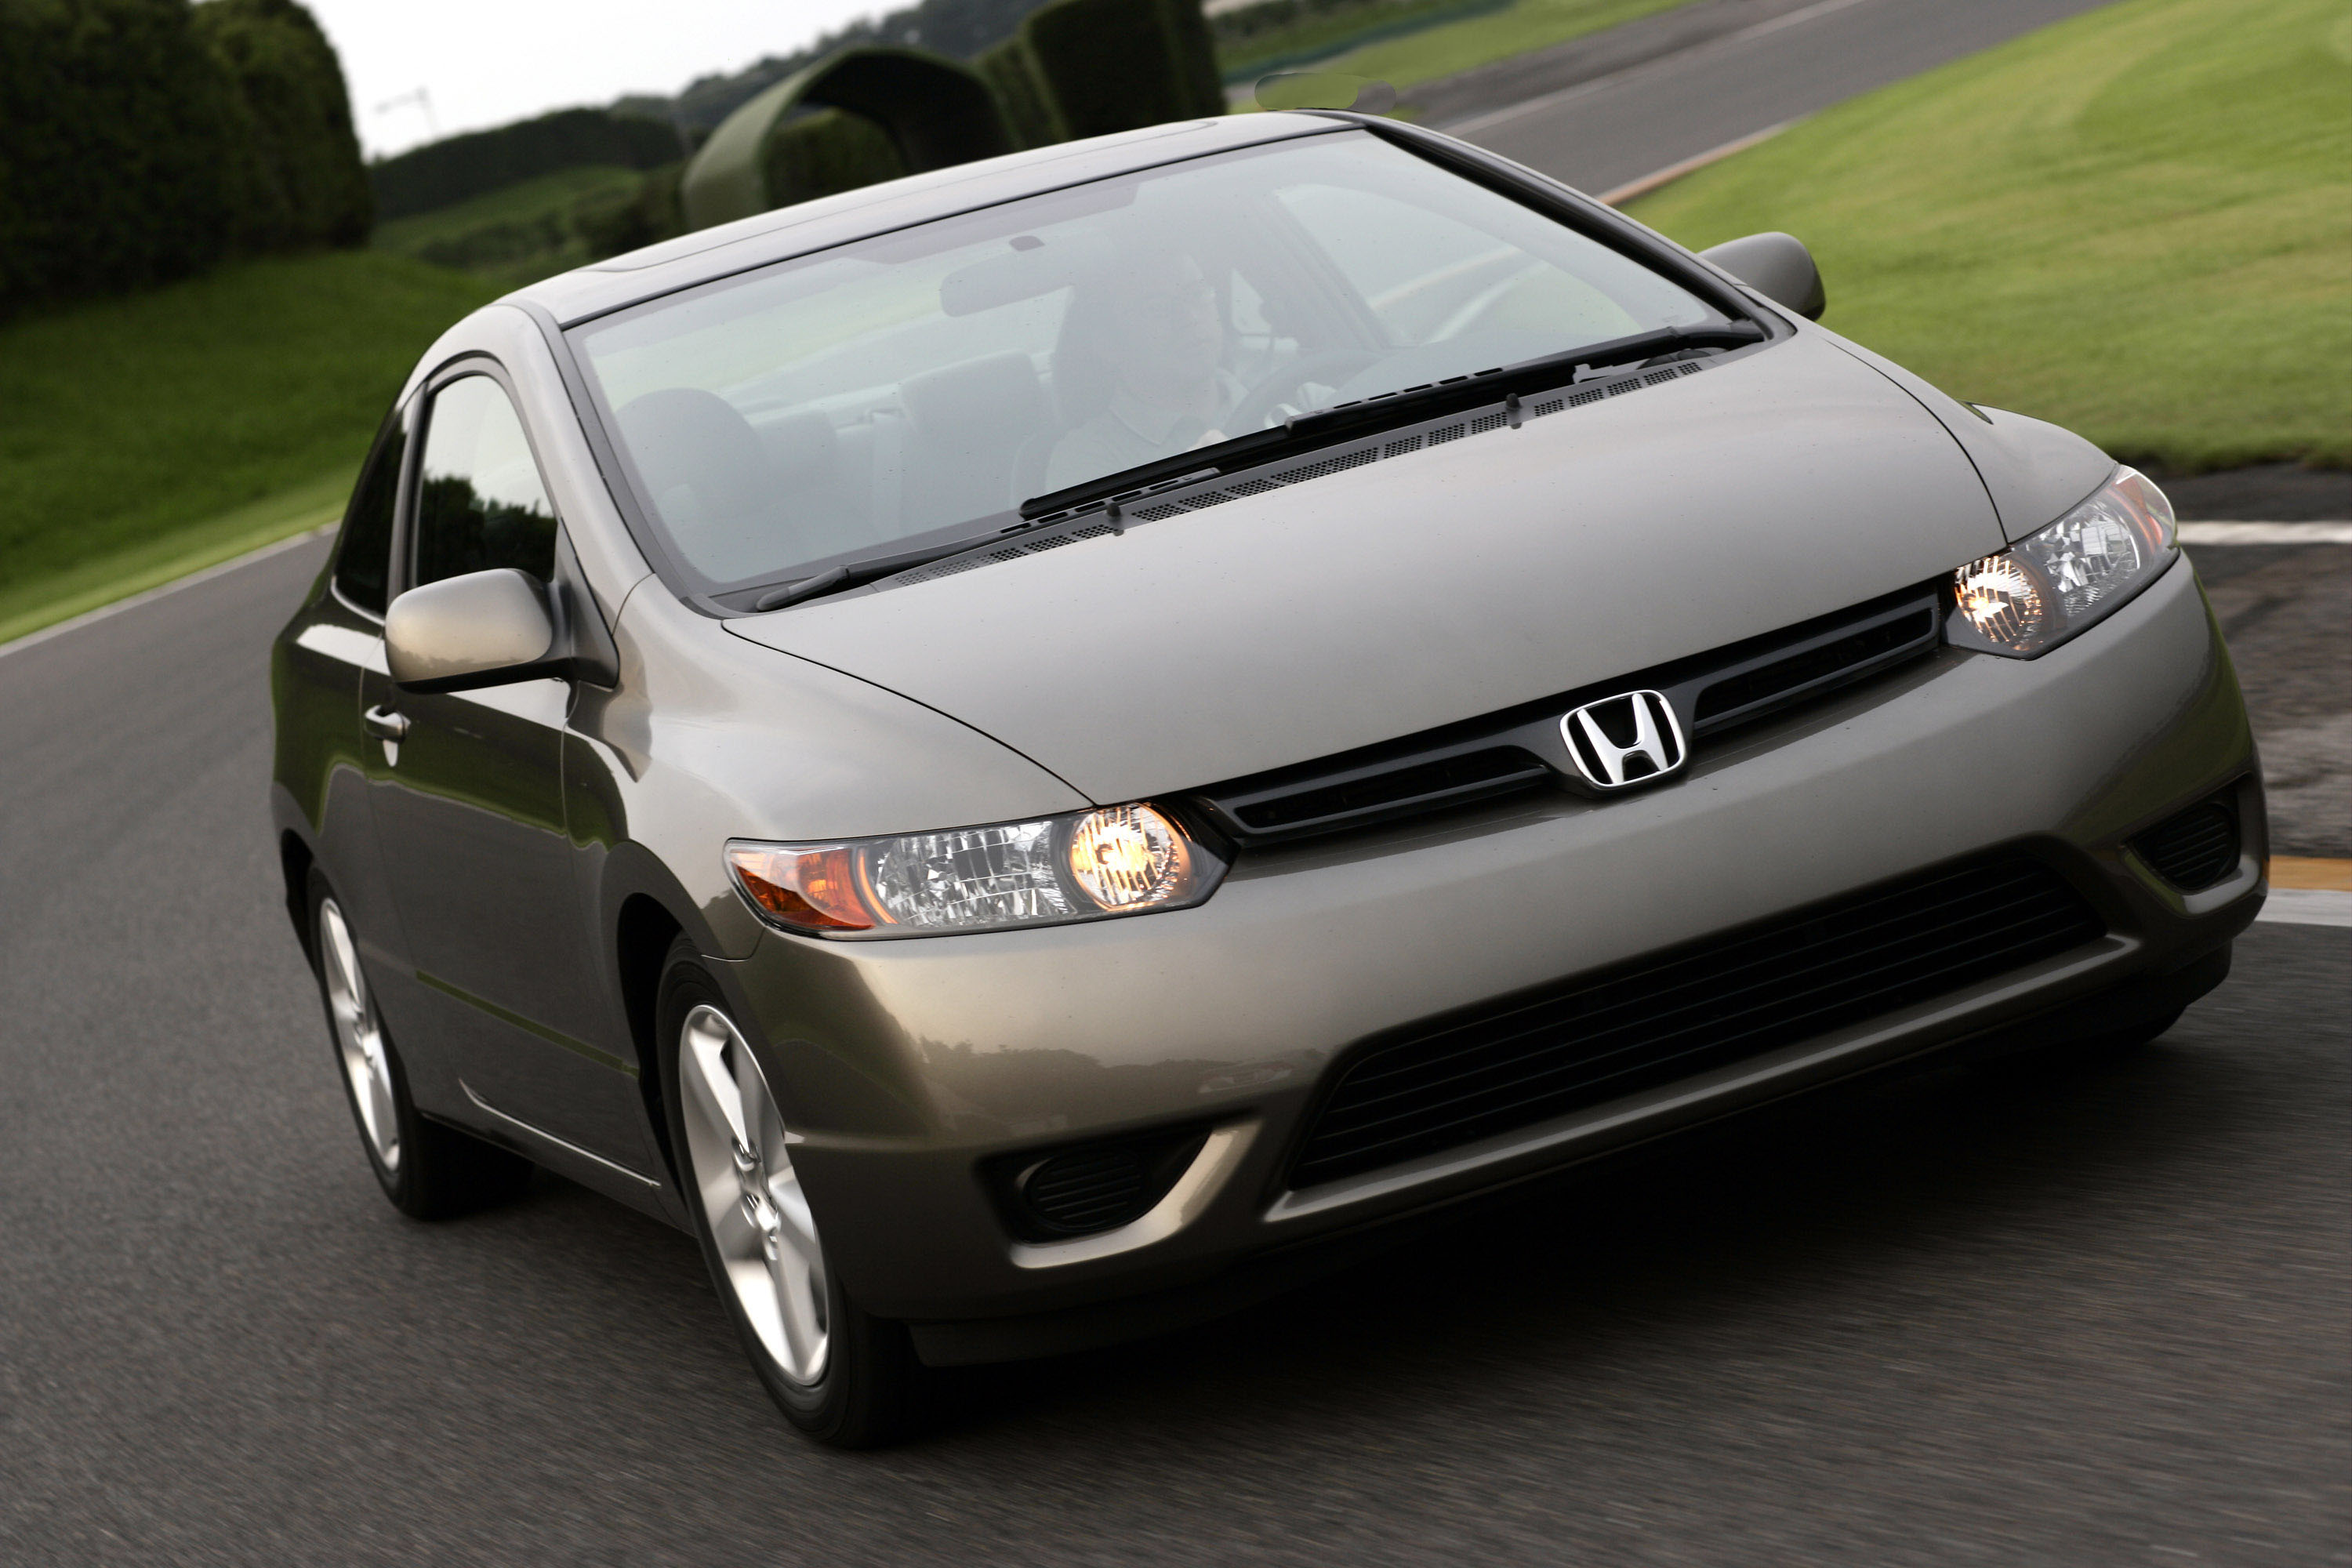 2006 Honda Civic Coupe - HD Pictures @ carsinvasion.com